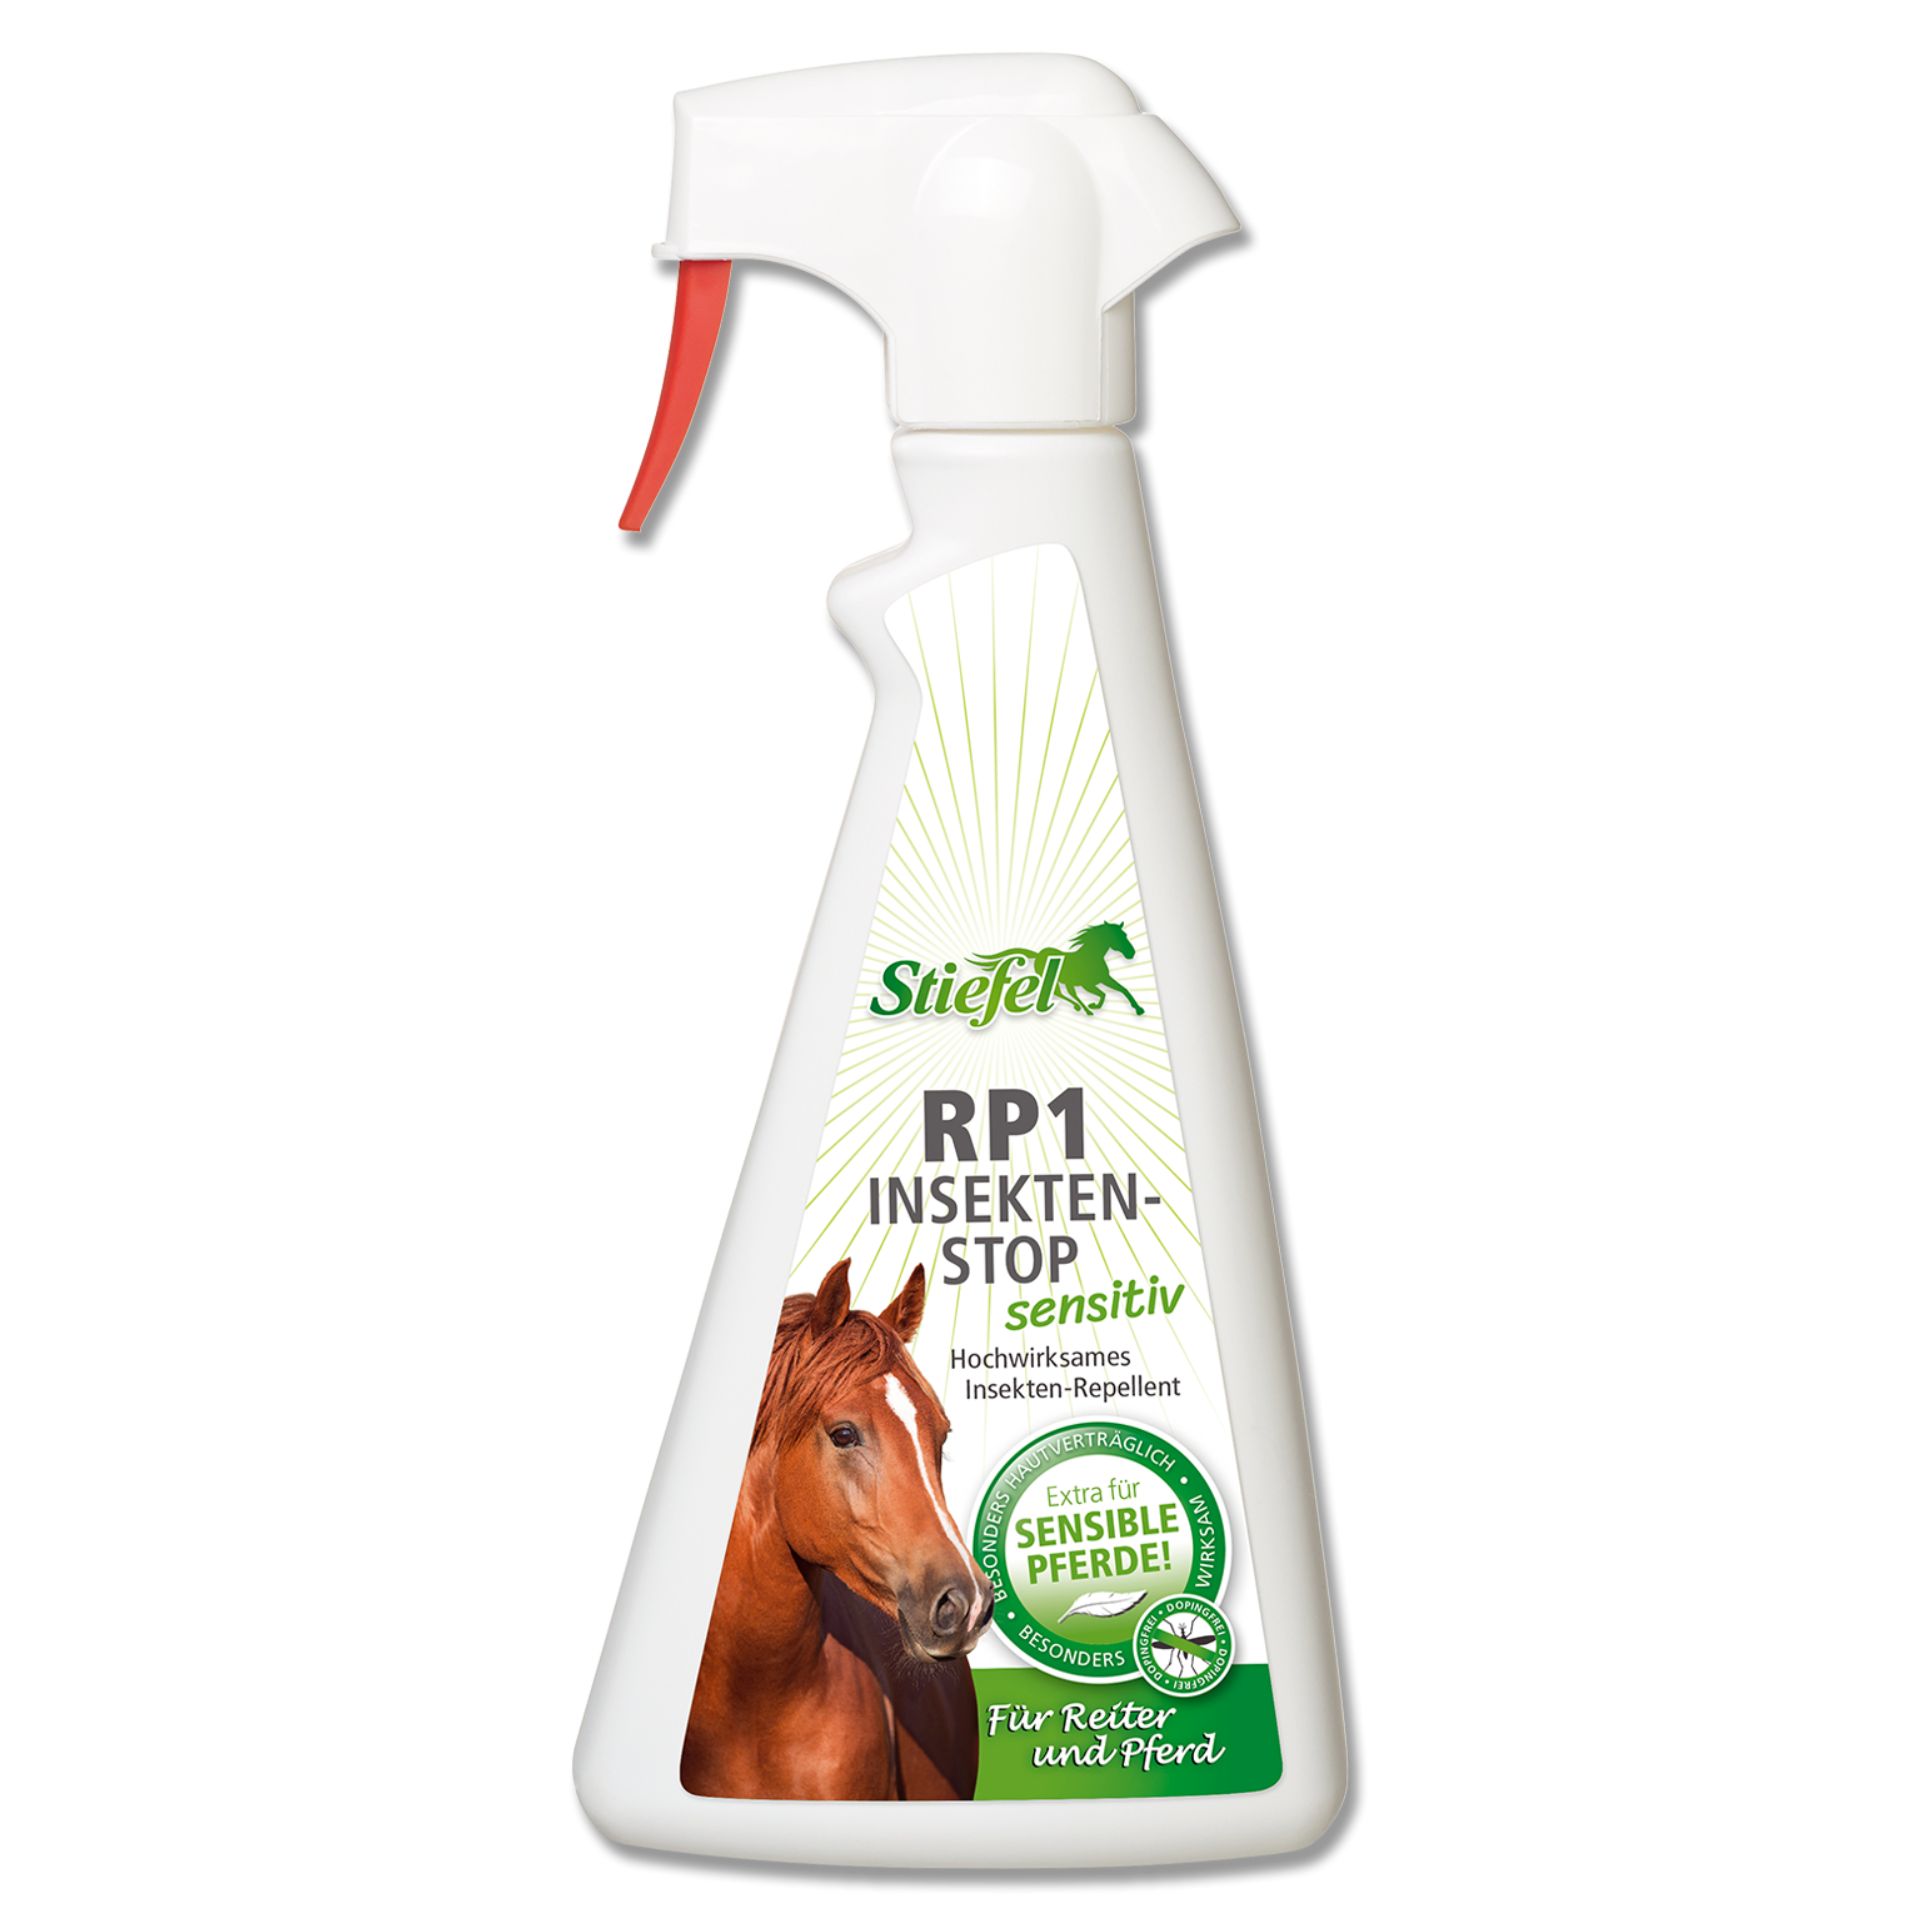 Stiefel gel RP1 INSEKTEN- STOP Sensitiv, 500 ml